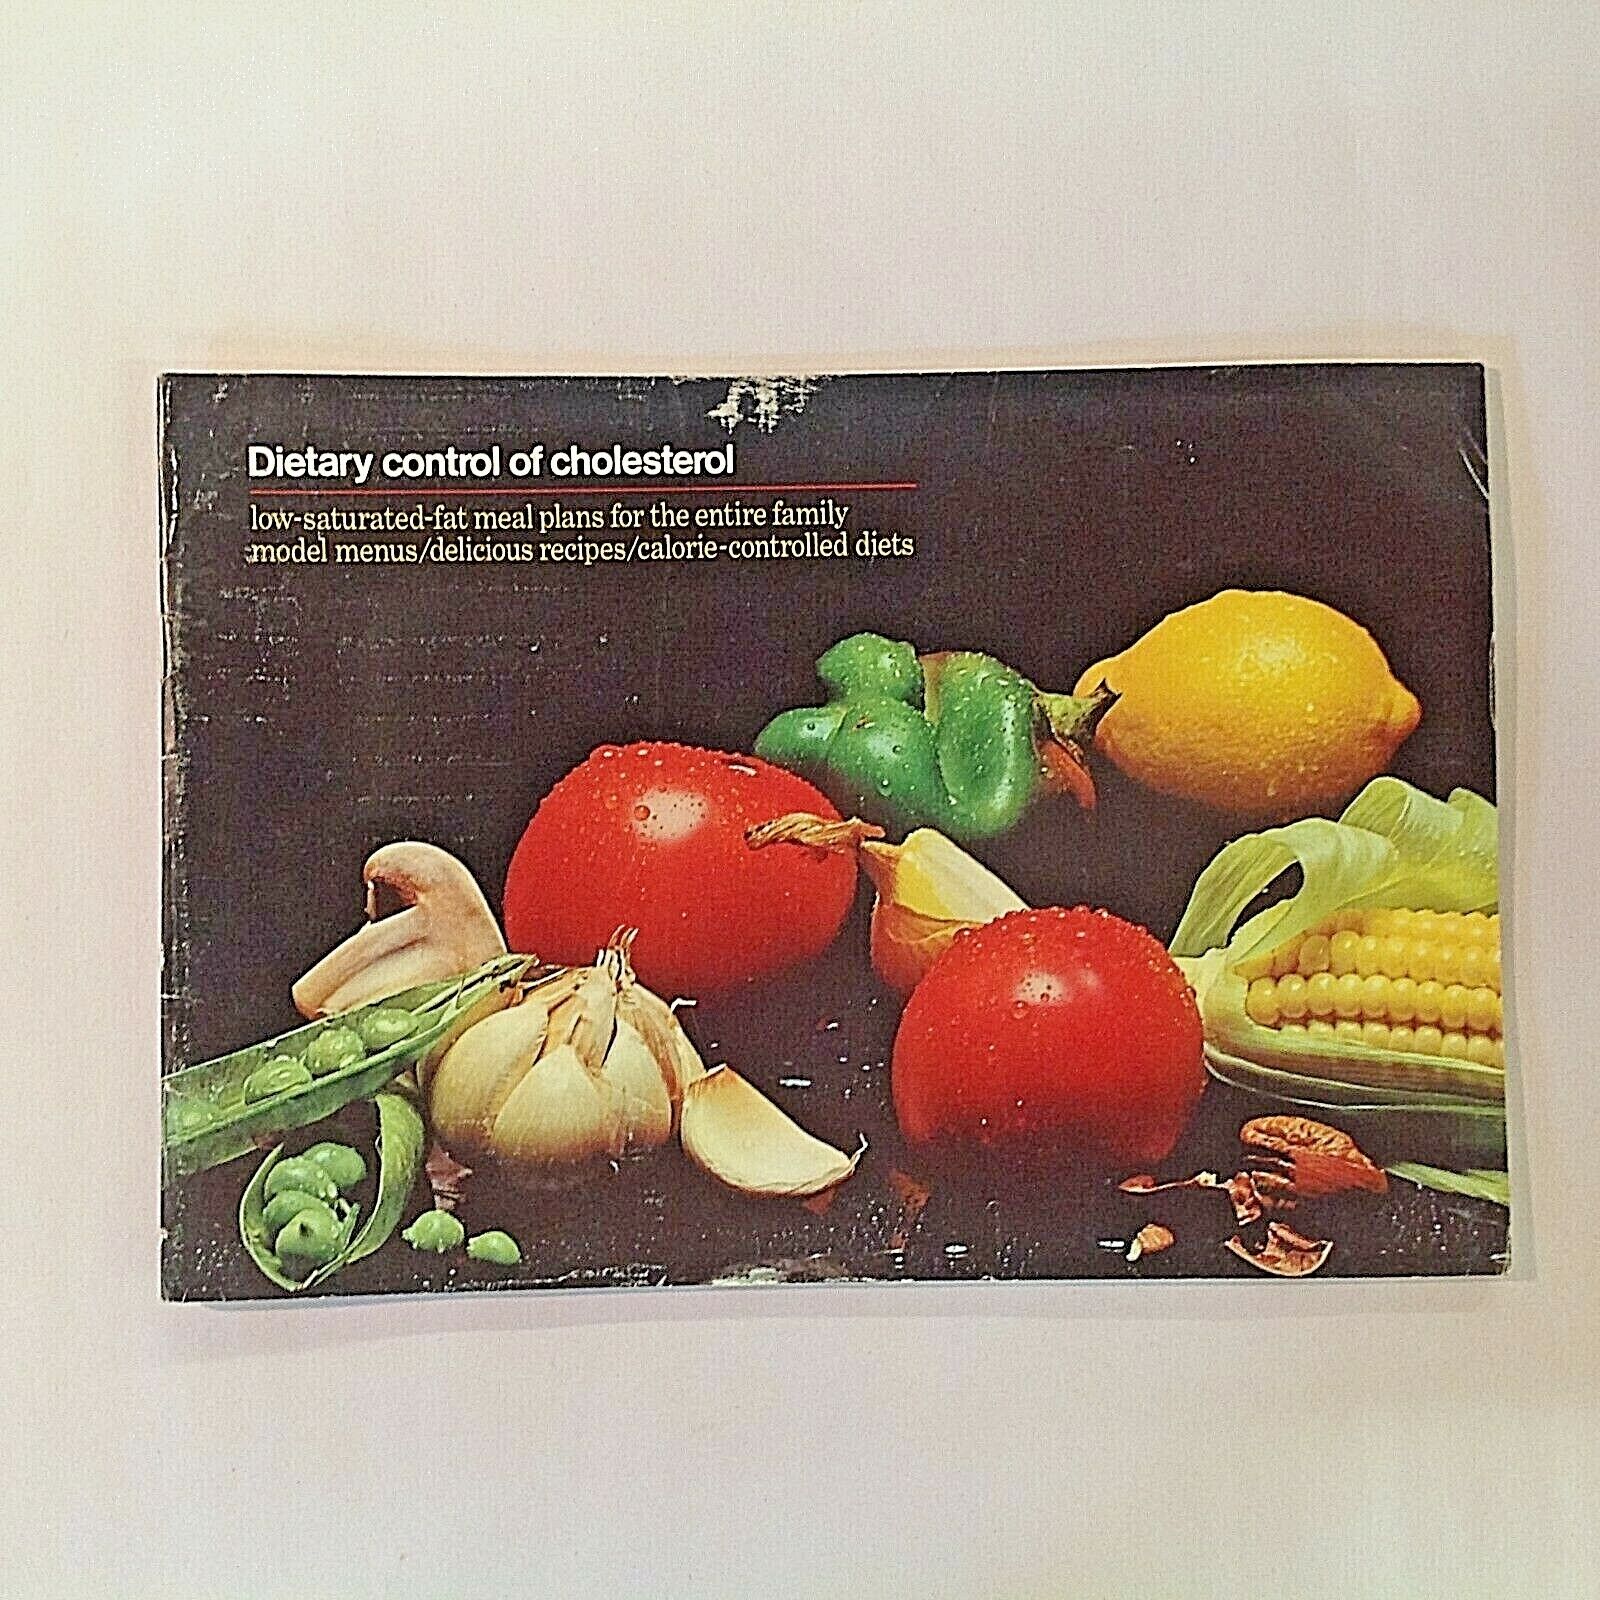 Vintage 1974 Fleischmann\'s Margarine Dietary Control of Cholesterol Recipe Guide